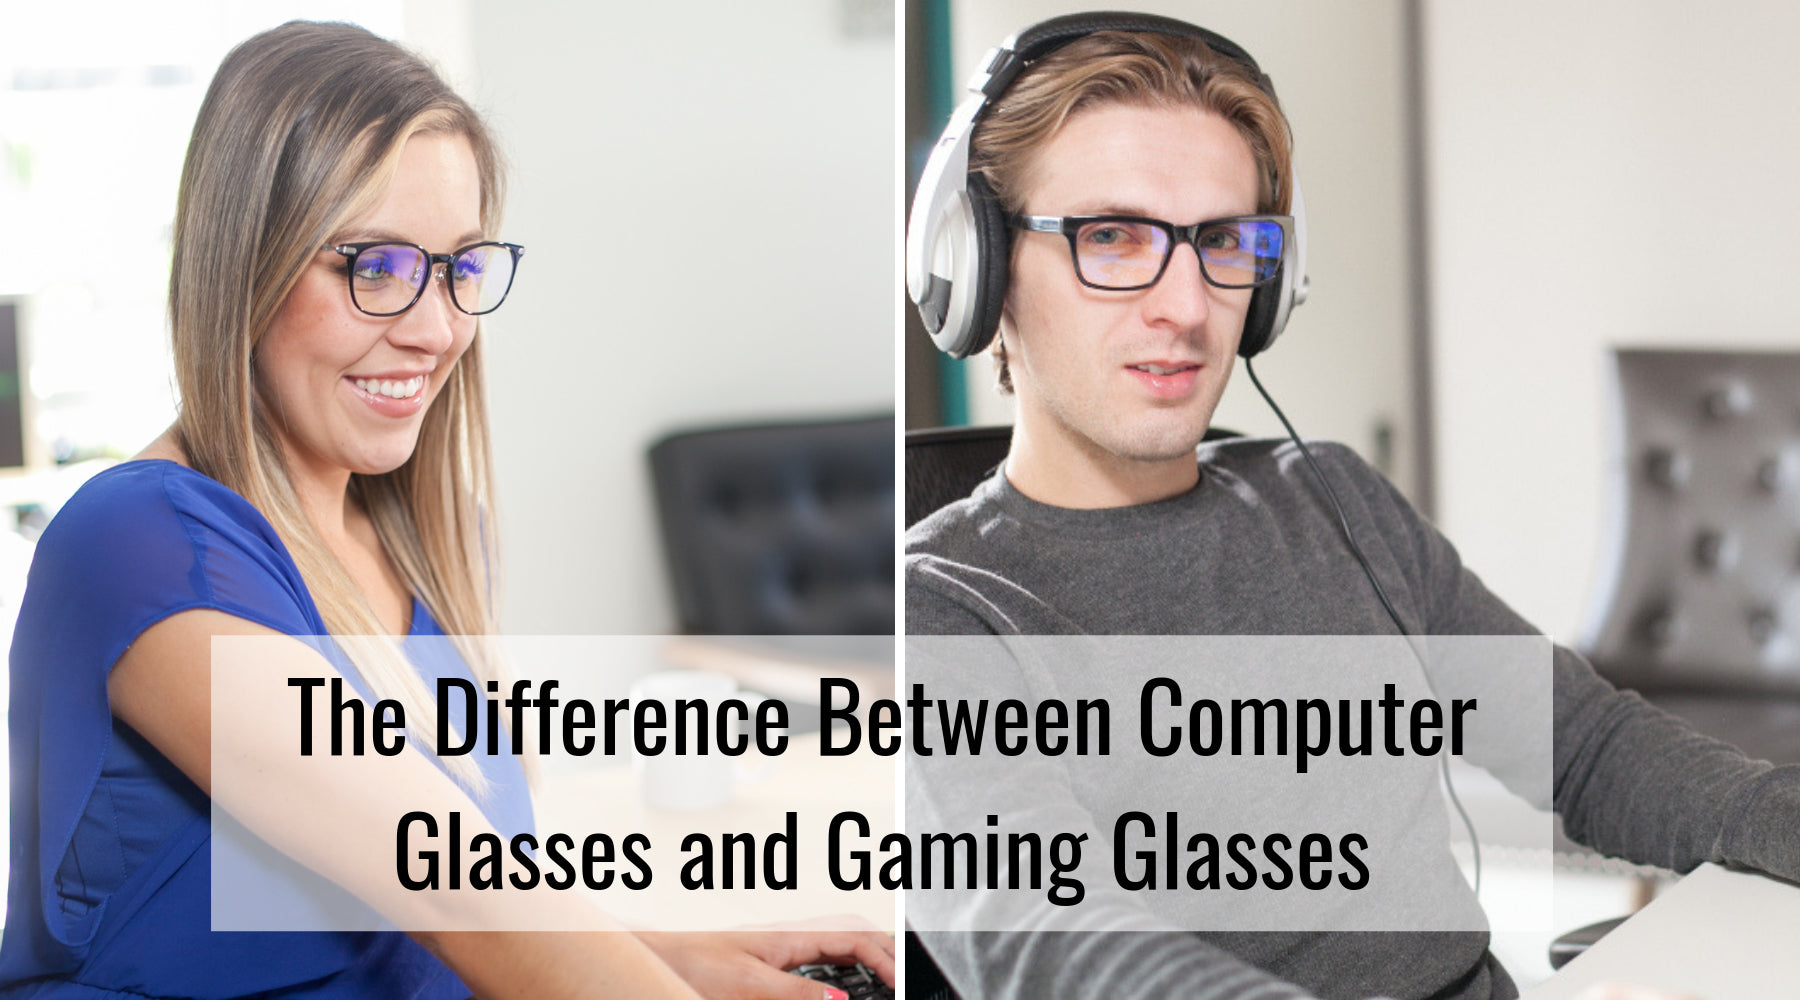 Blue Light Blocking Glasses for Men/Women Anti-Fatigue Computer Monitor  Gaming Glasses Prevent Headaches Gamer Glasses